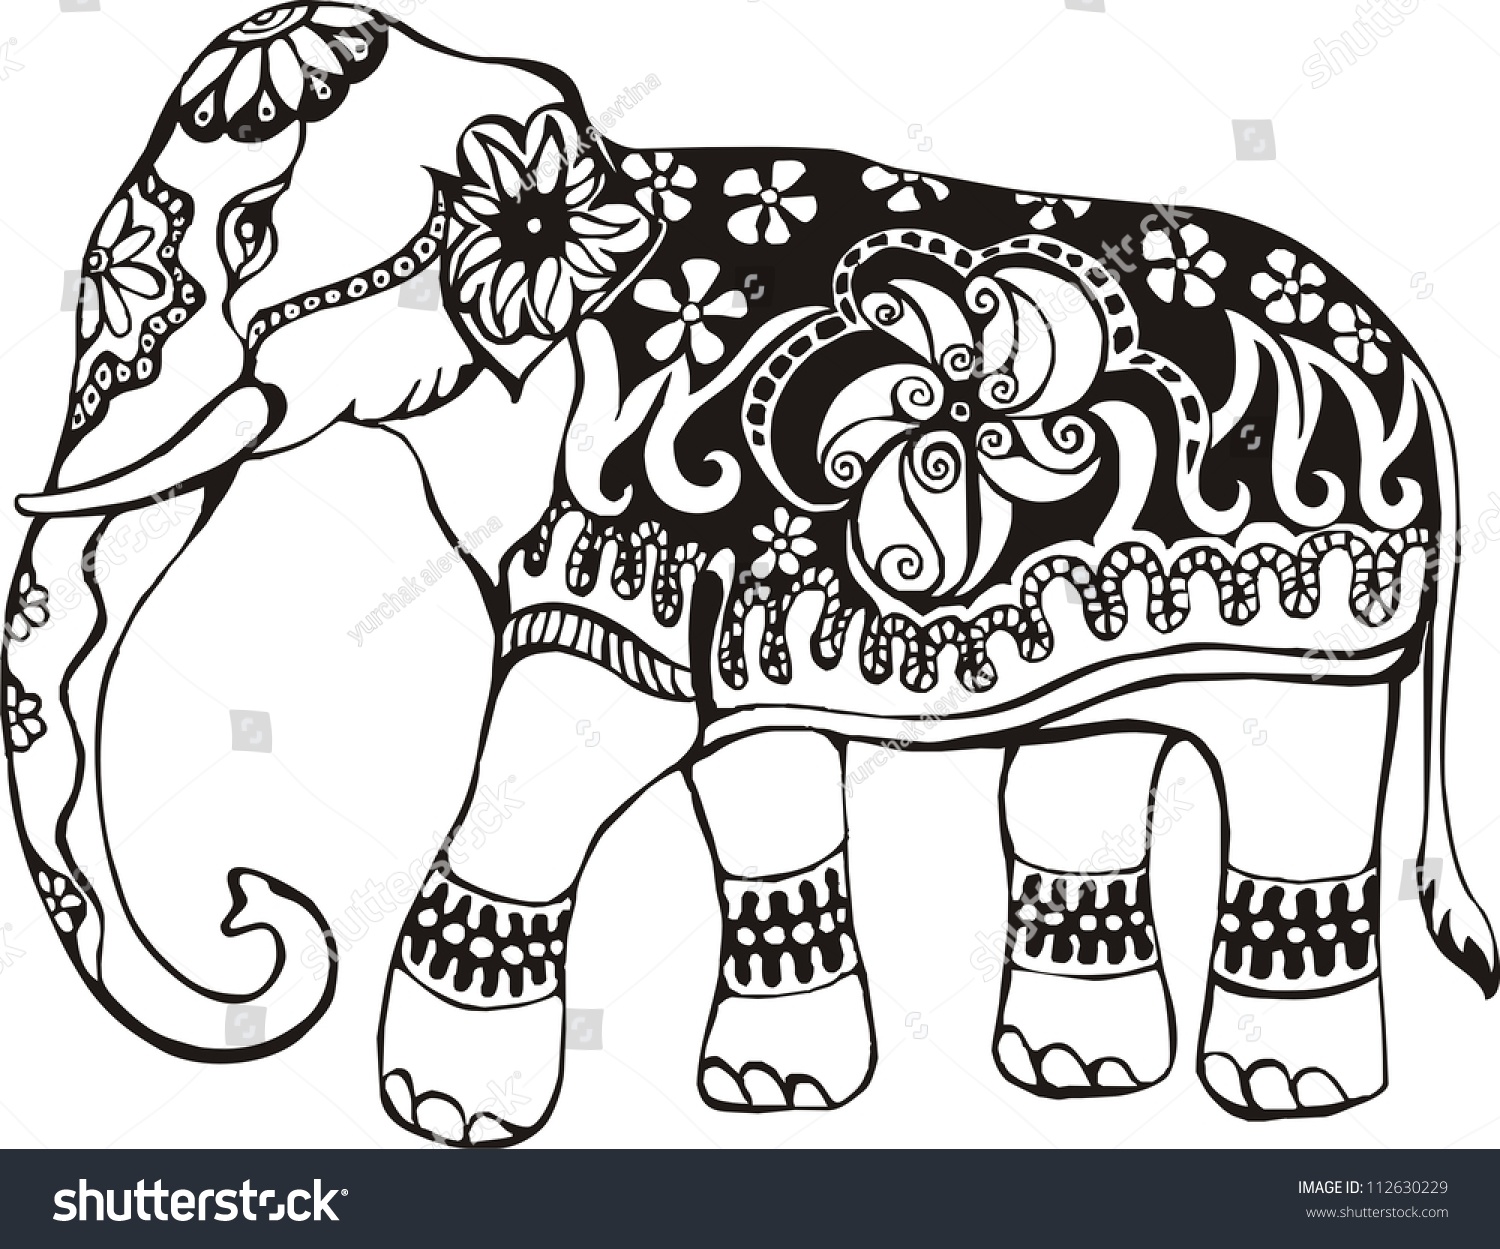 Индийский слон трафарет